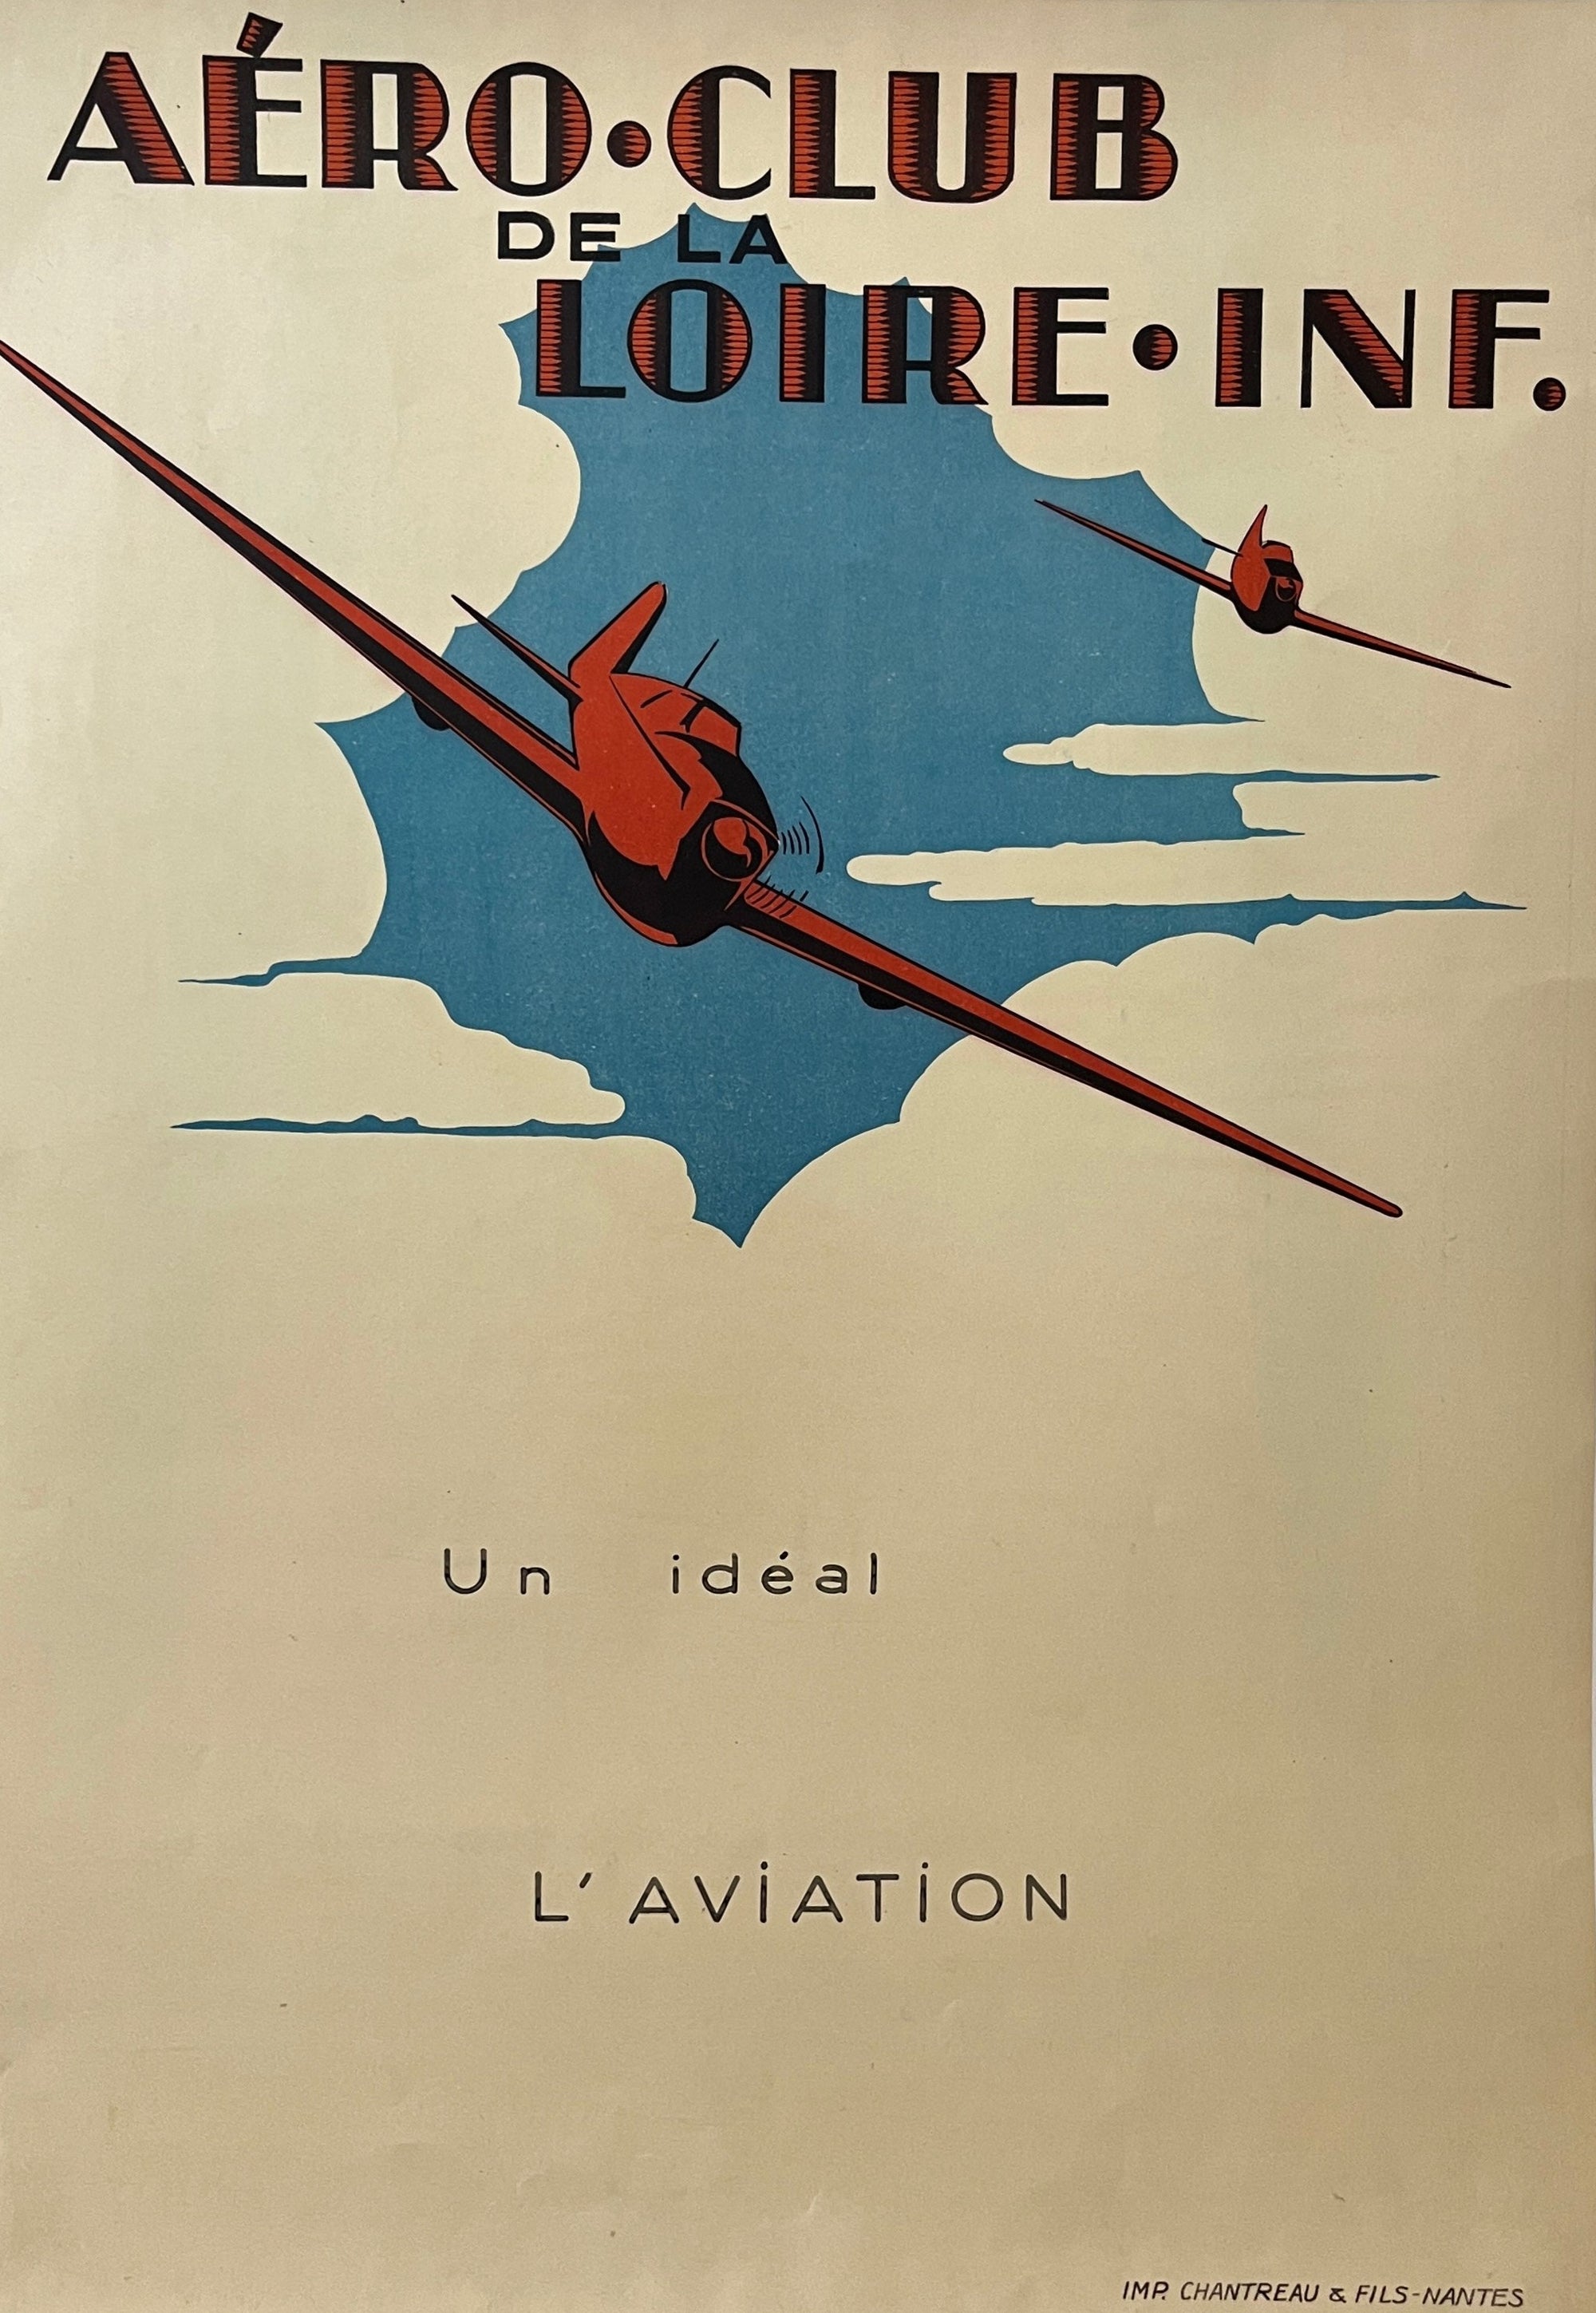 Aero Club Loire Inf Vintage Poster